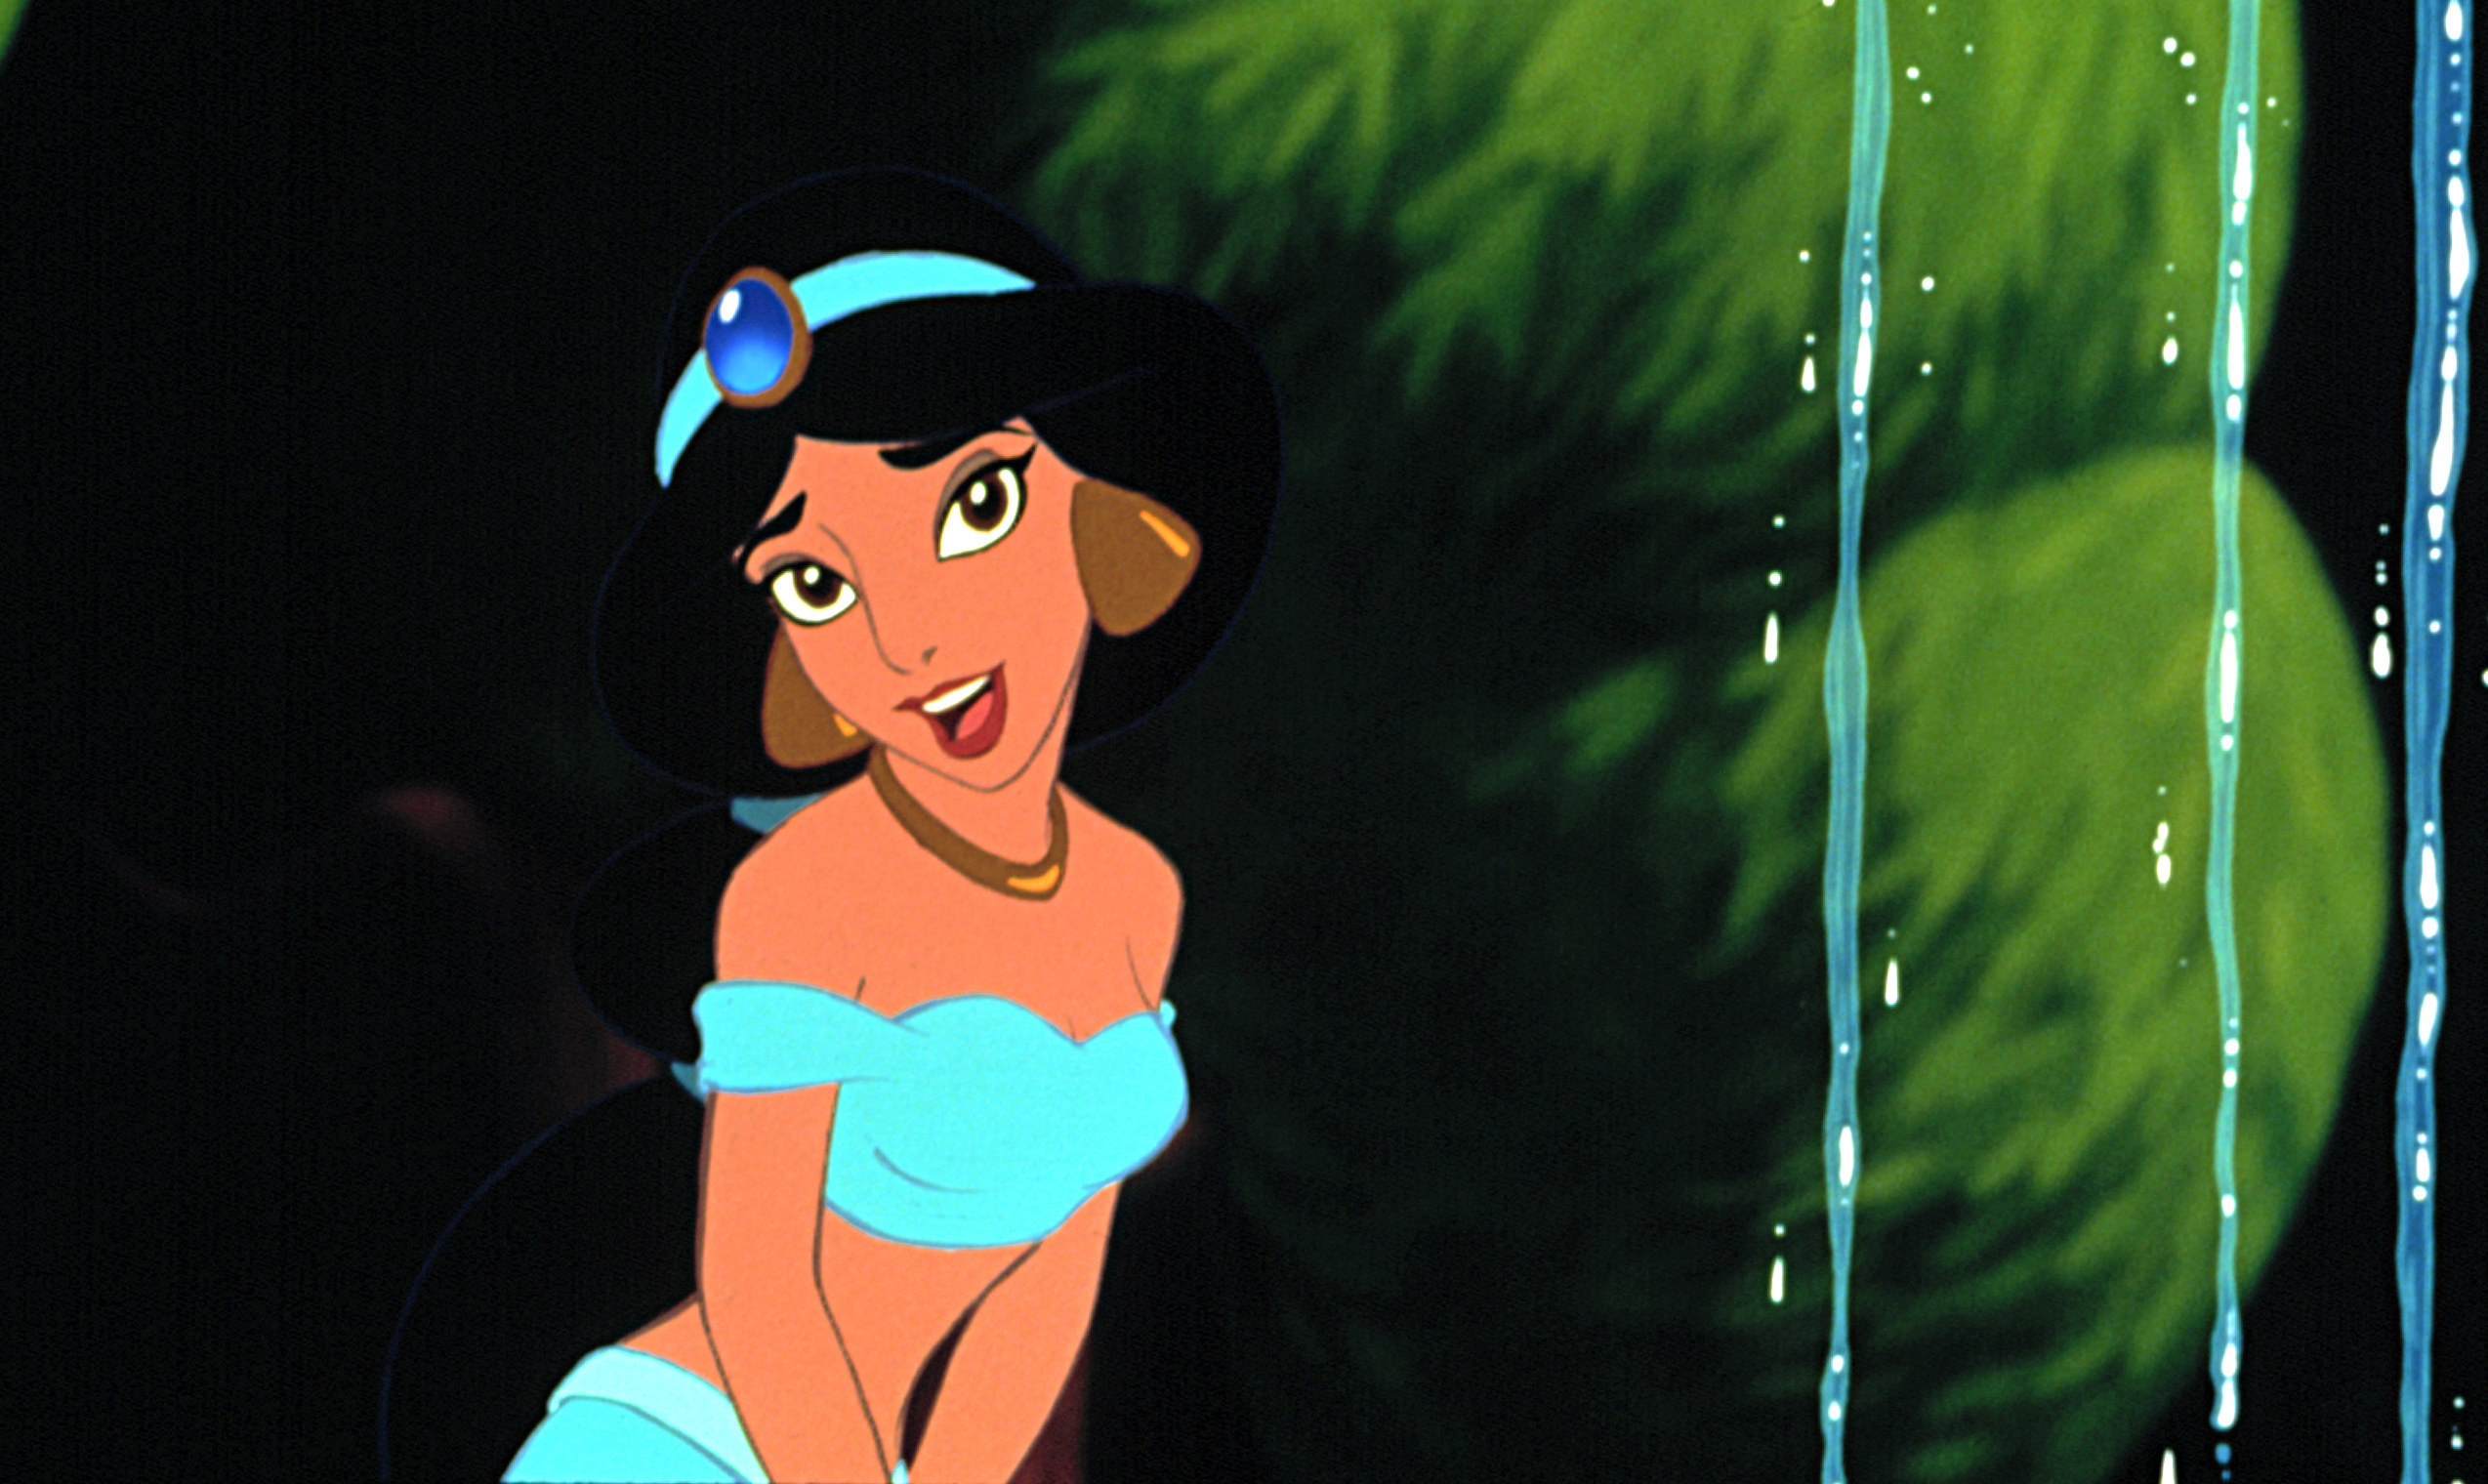 Jasmine in the animated version of Aladdin